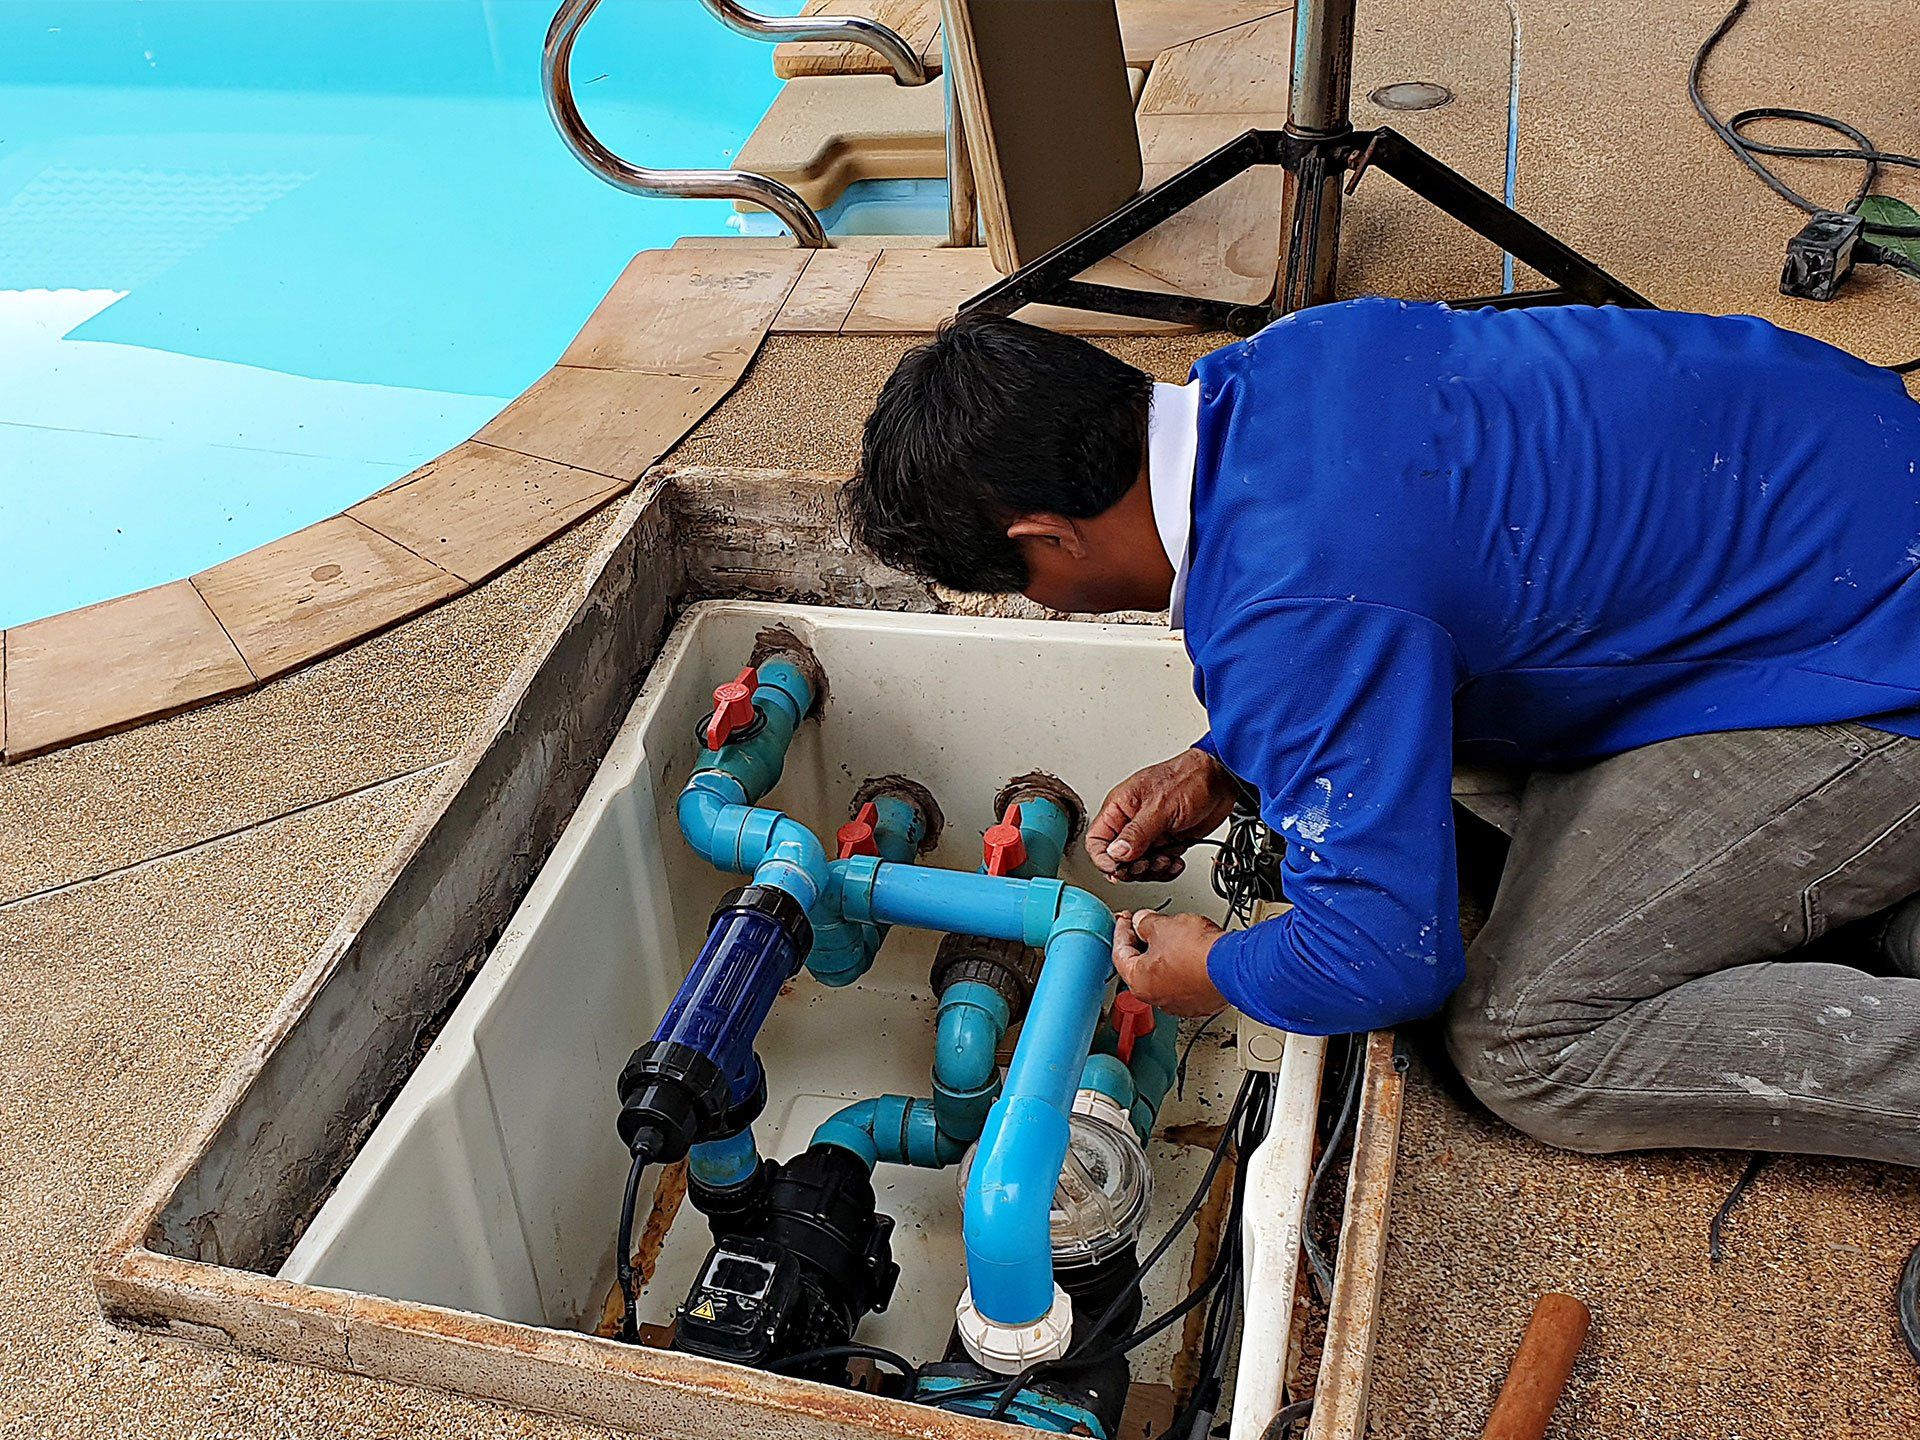 Pool leak detection being performed by technician in Omaha, NE